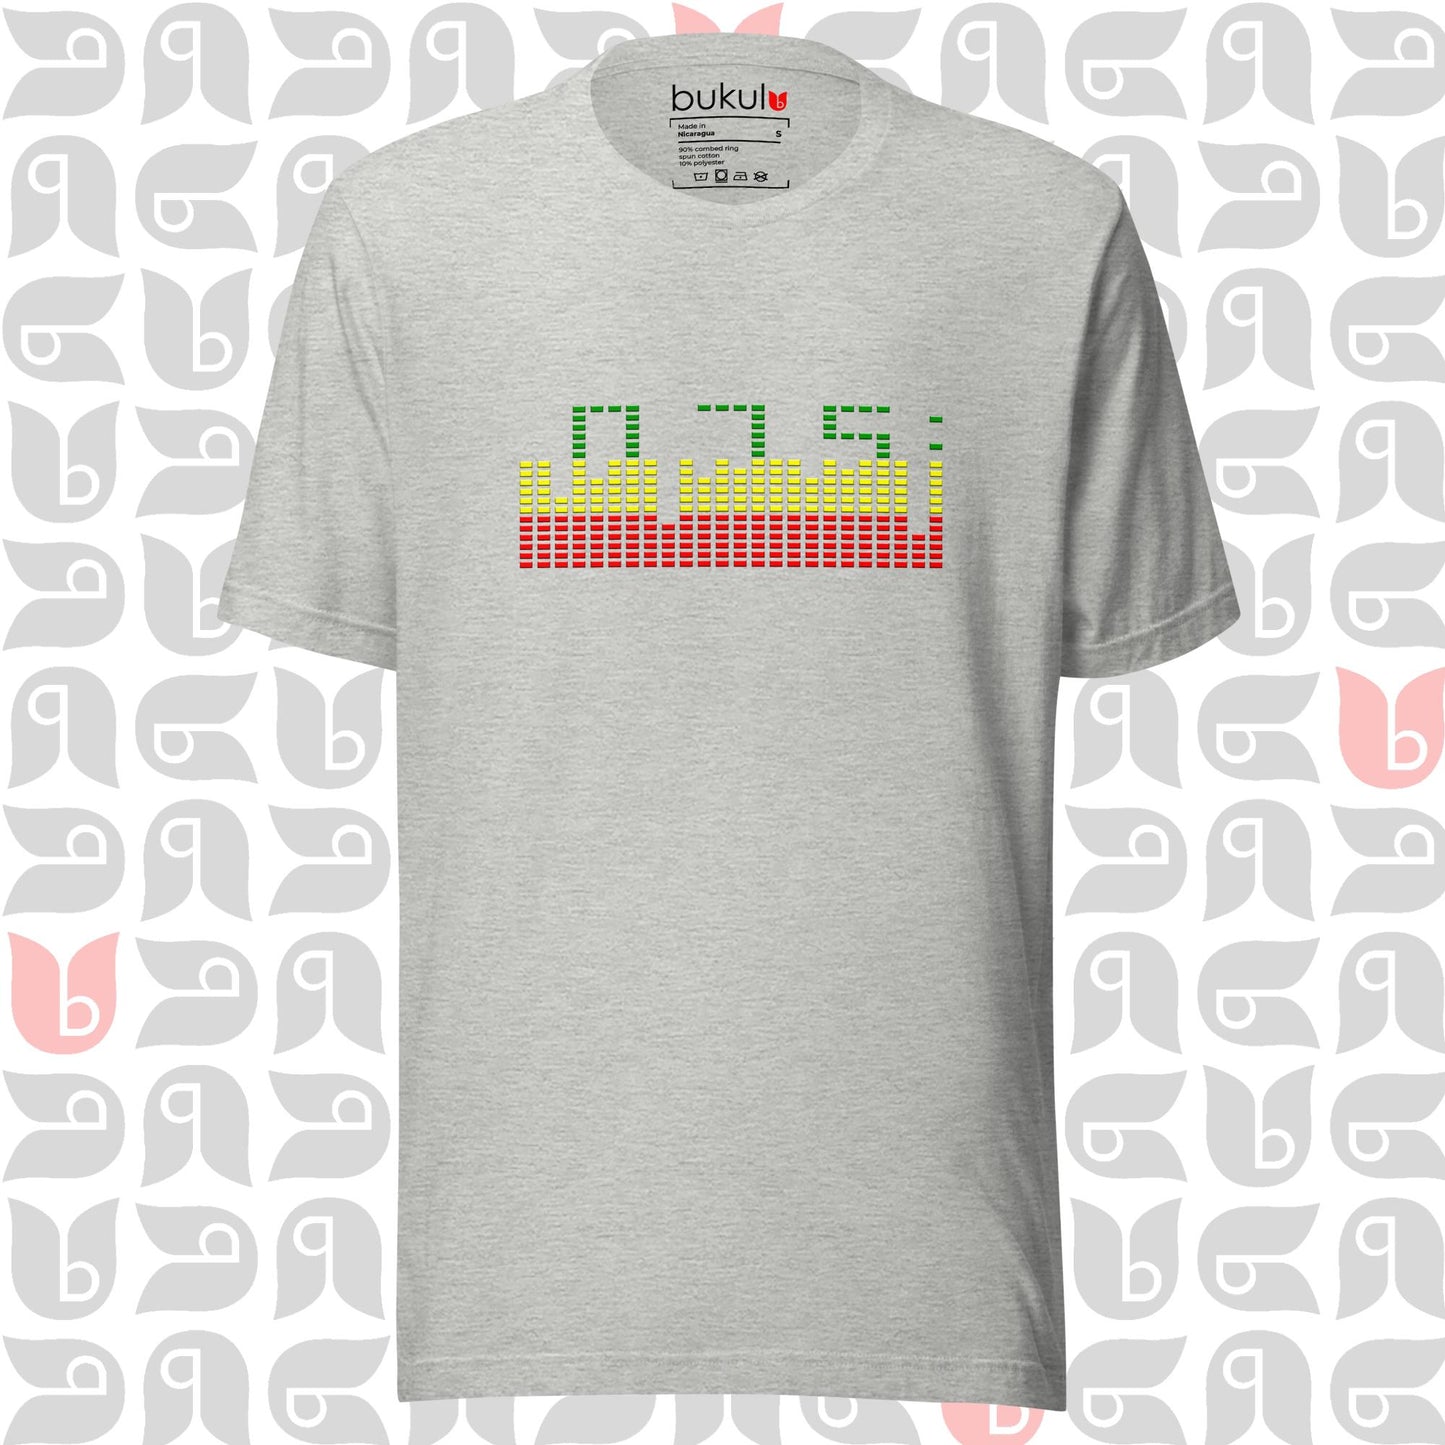 Ethiopian Begena Music T-Shirt - Graphic Equalizer Design Unisex Top